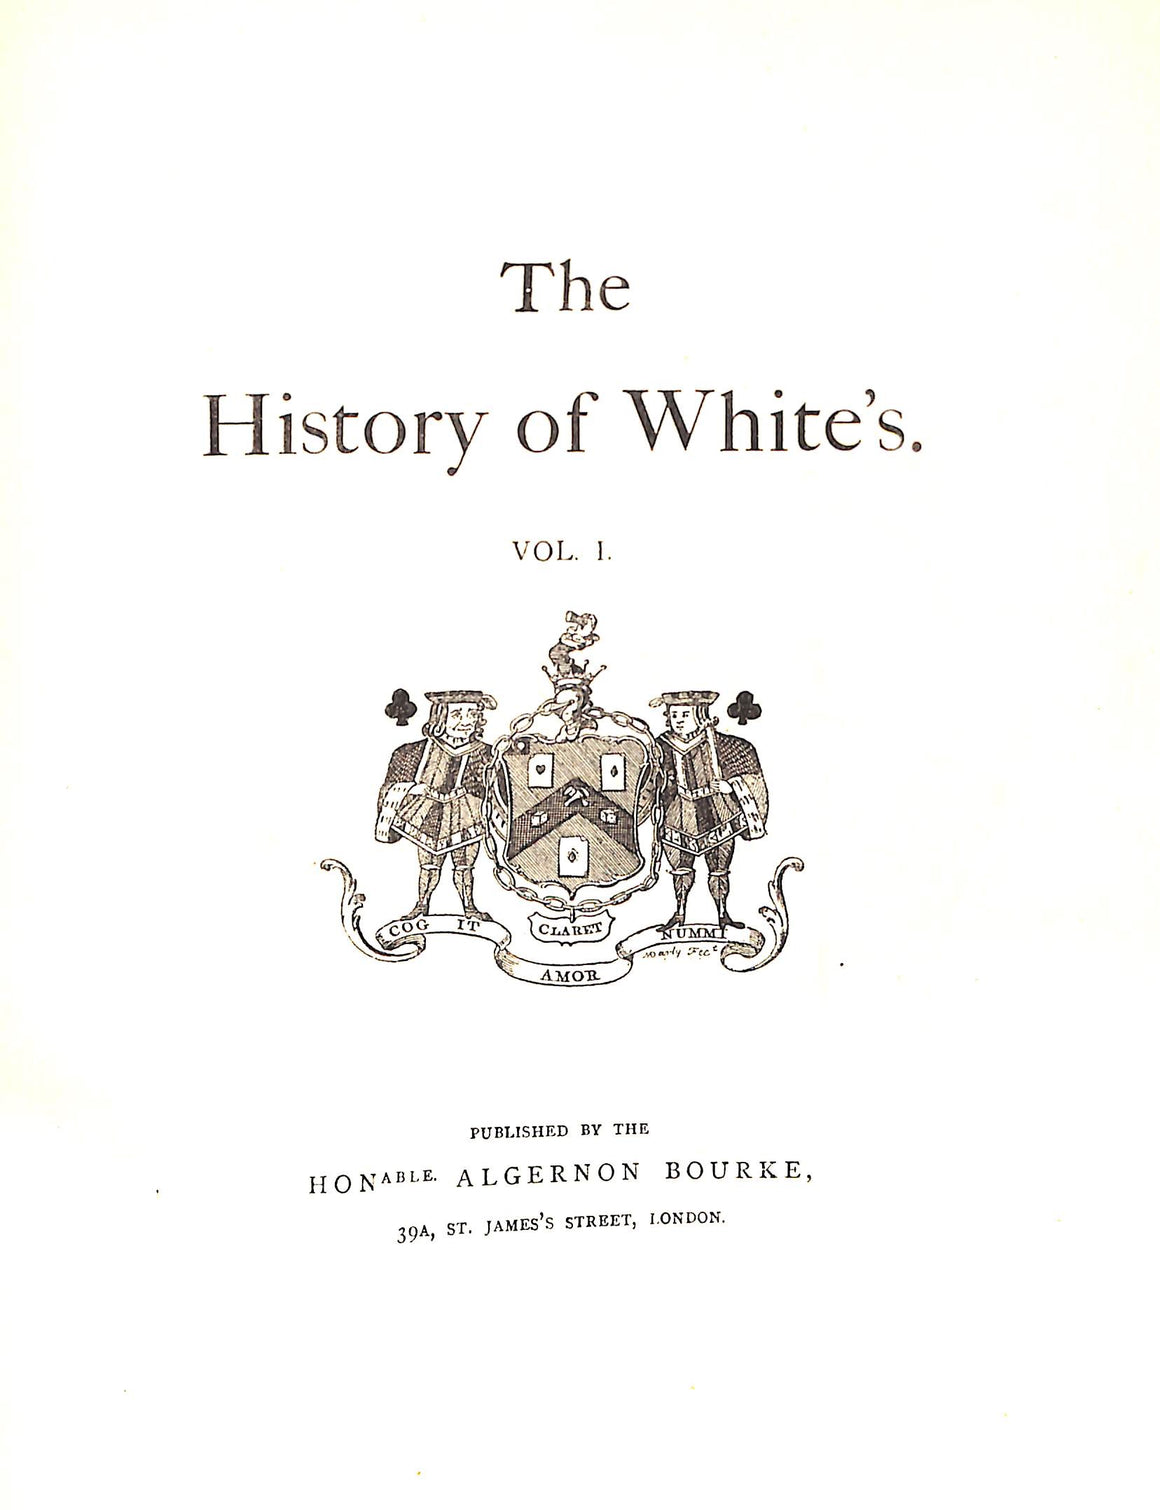 The History of White's (Vol I & II)